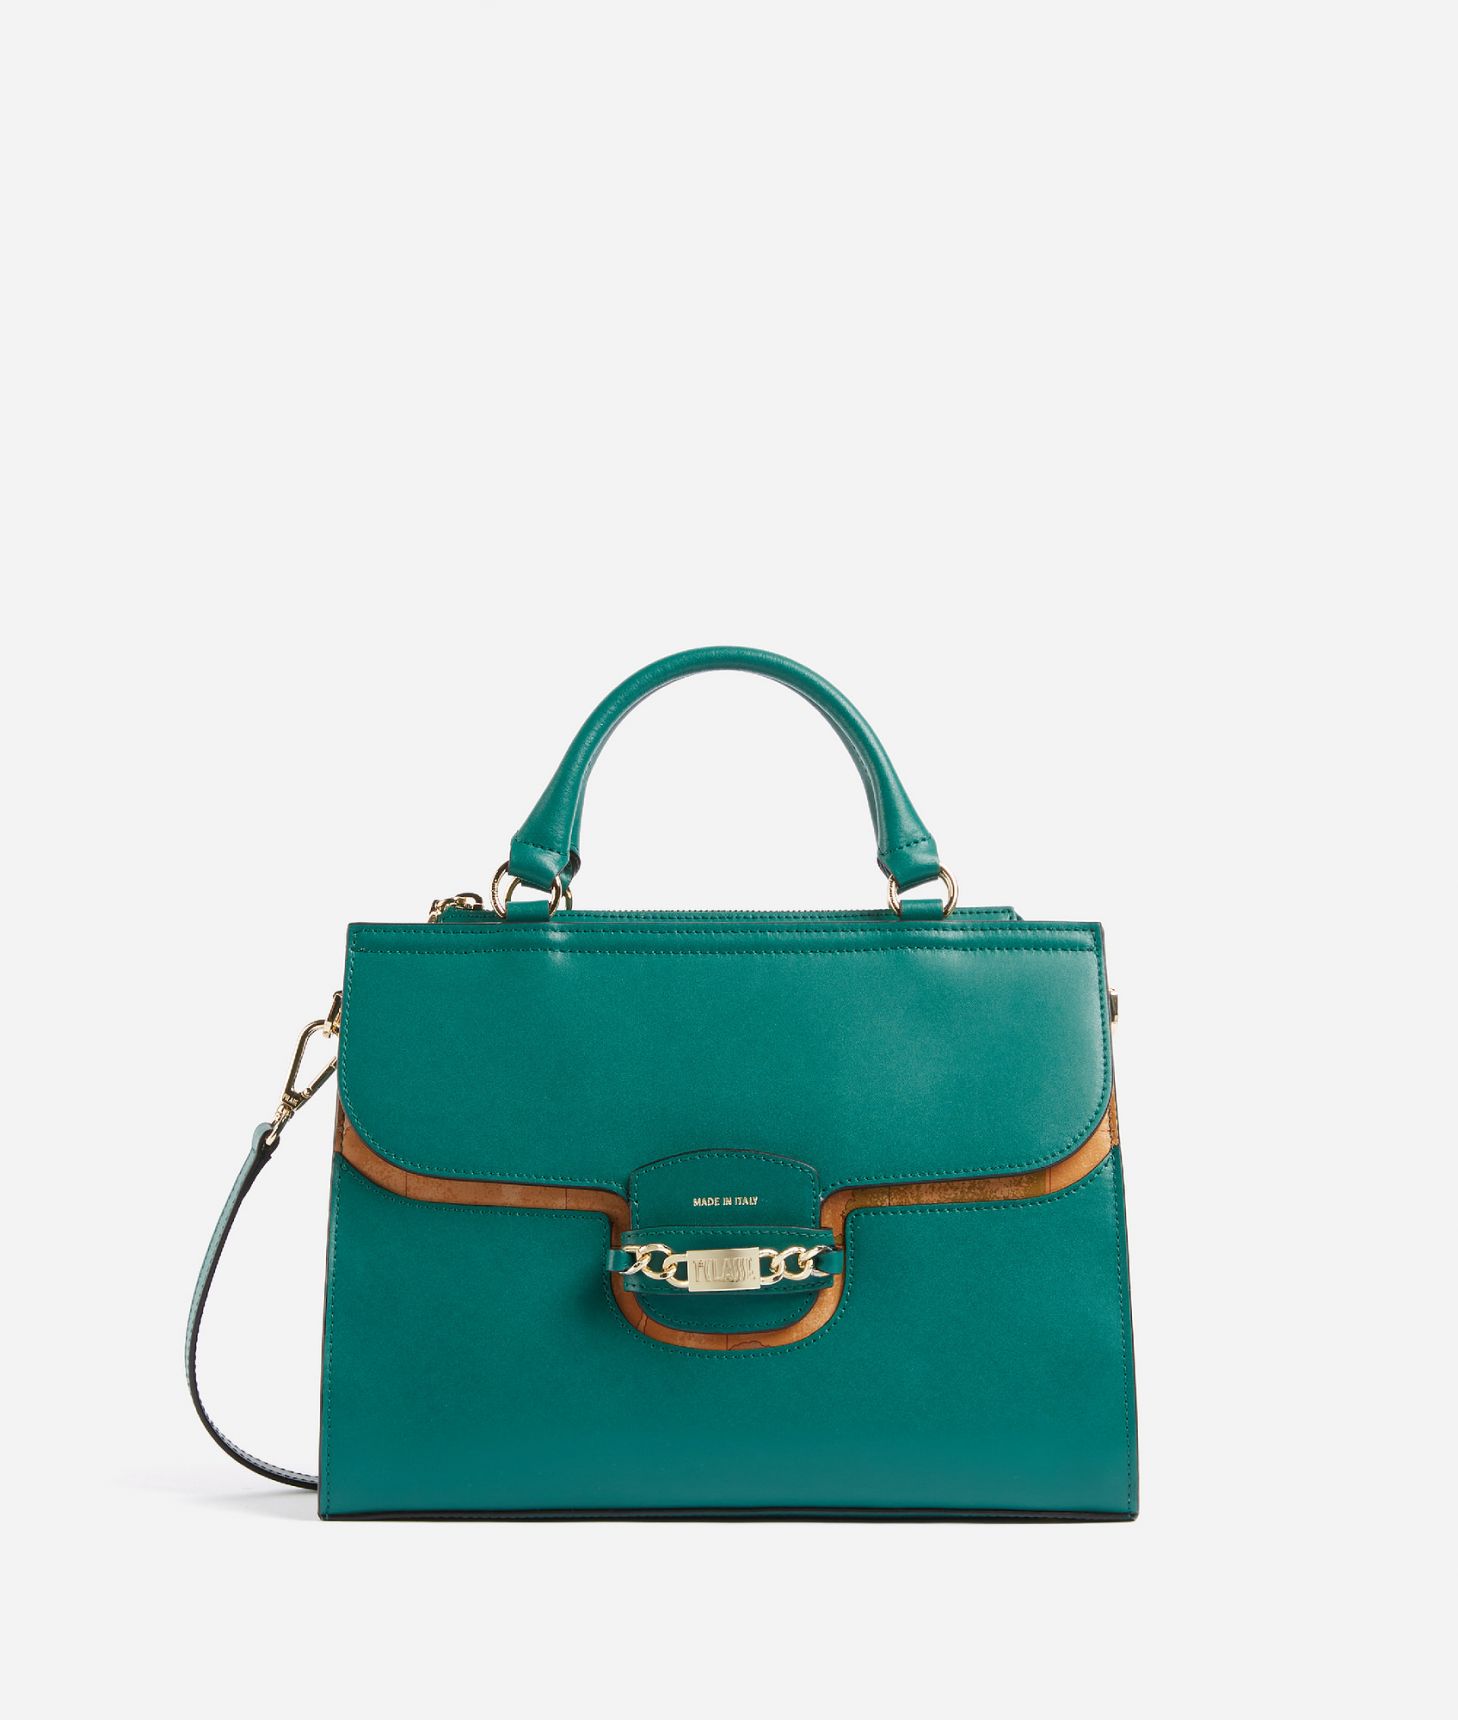 Millennium Bag smooth leather handbag with shoulder strap Emerald Green,front